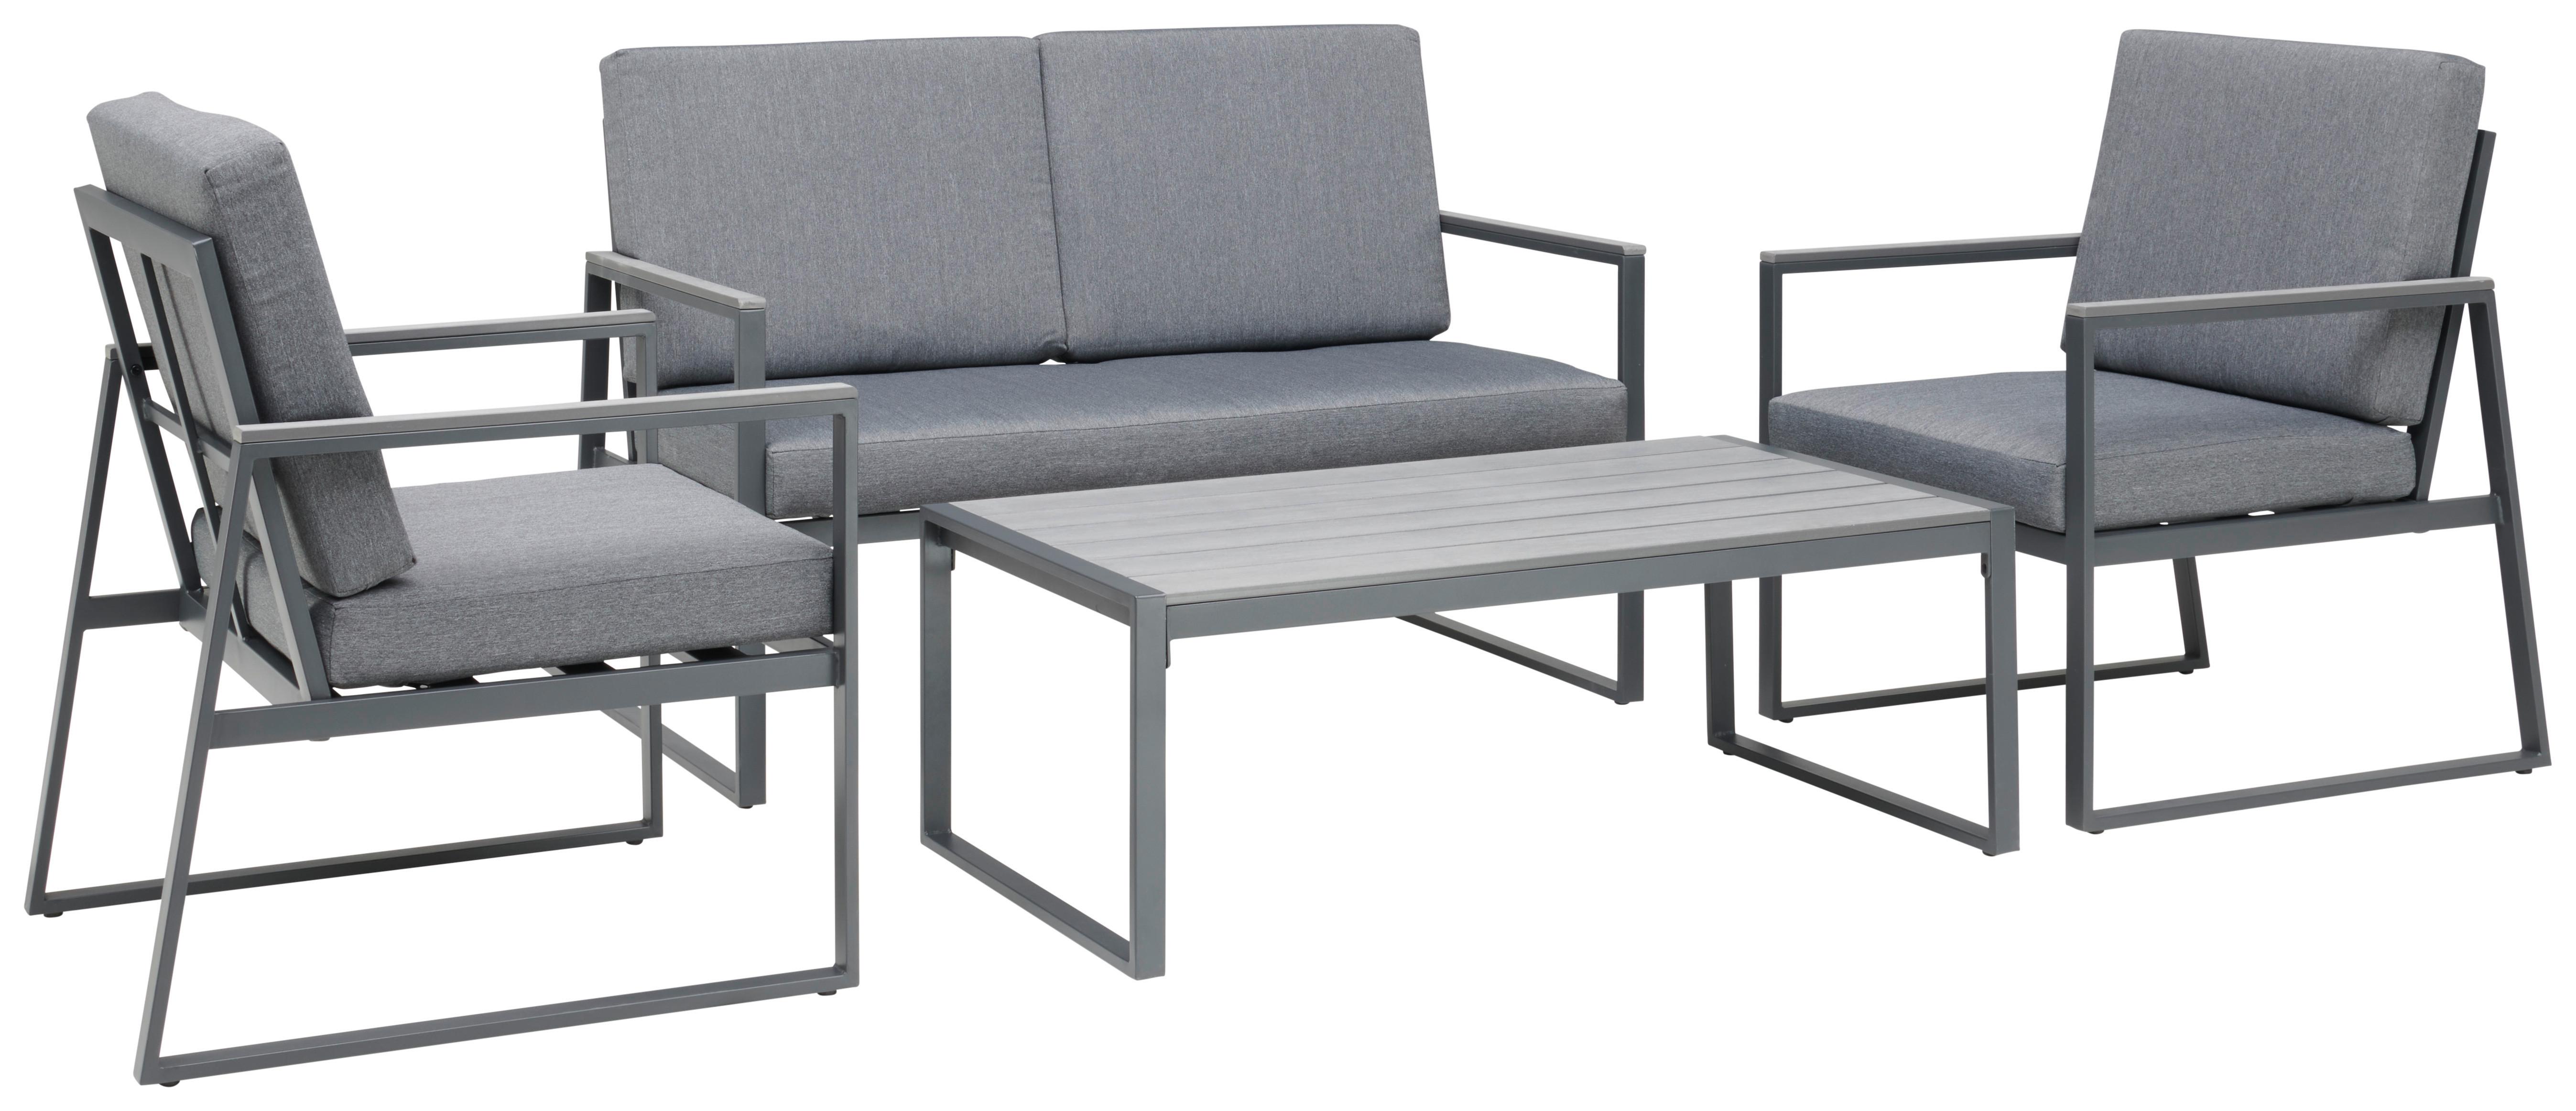 Loungegarnitur in Grau - Grau, MODERN, Kunststoff/Textil (272/81/140cm) - Modern Living